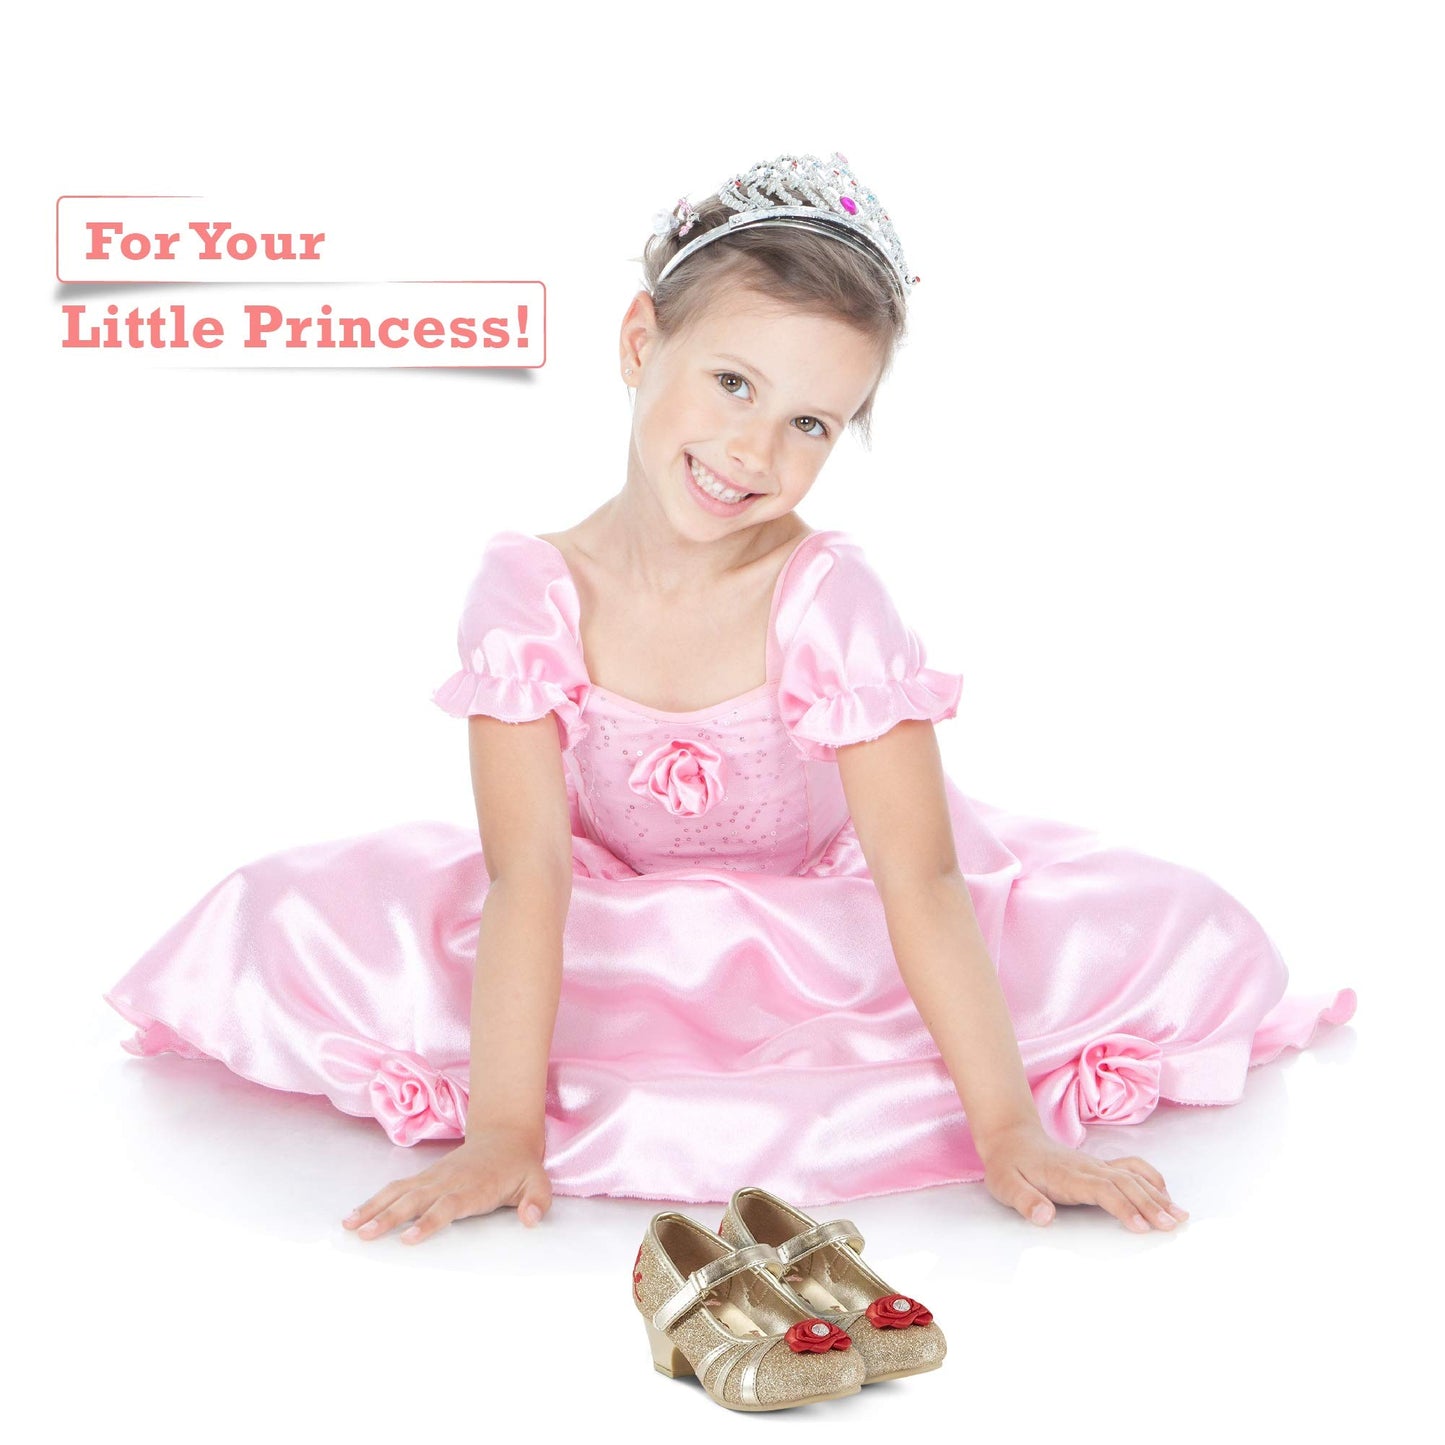 Disney Princess Belle Rose Gold Glitter Dress Shoe (Toddler/Little Kid)